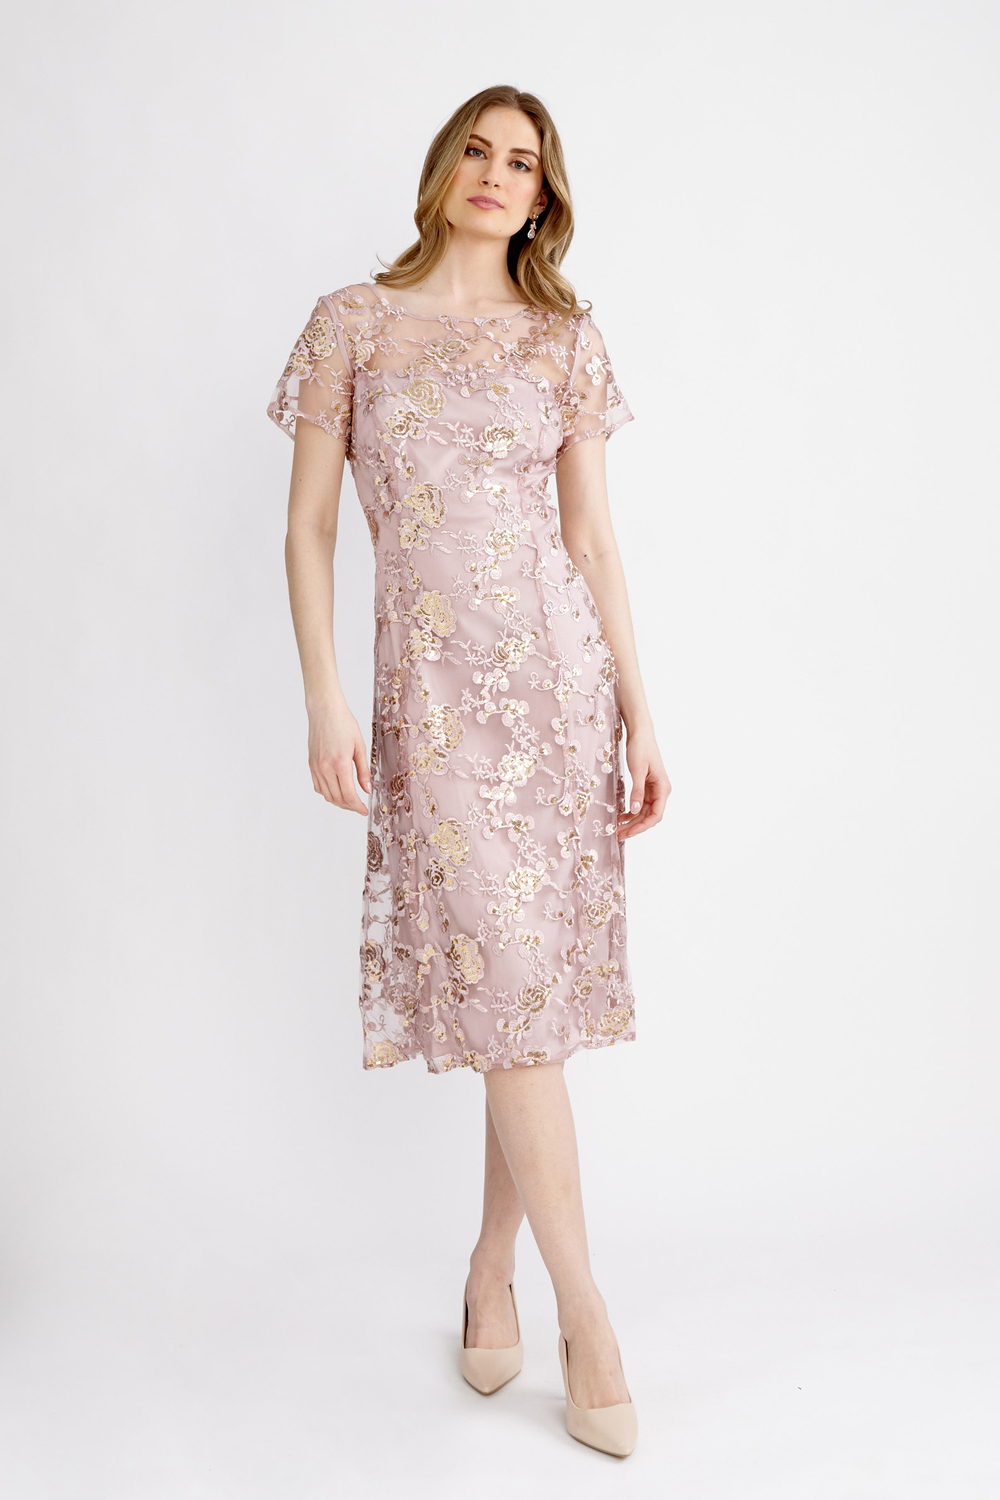 Embroidered Illusion Neckline Dress Style 9120293. Blush